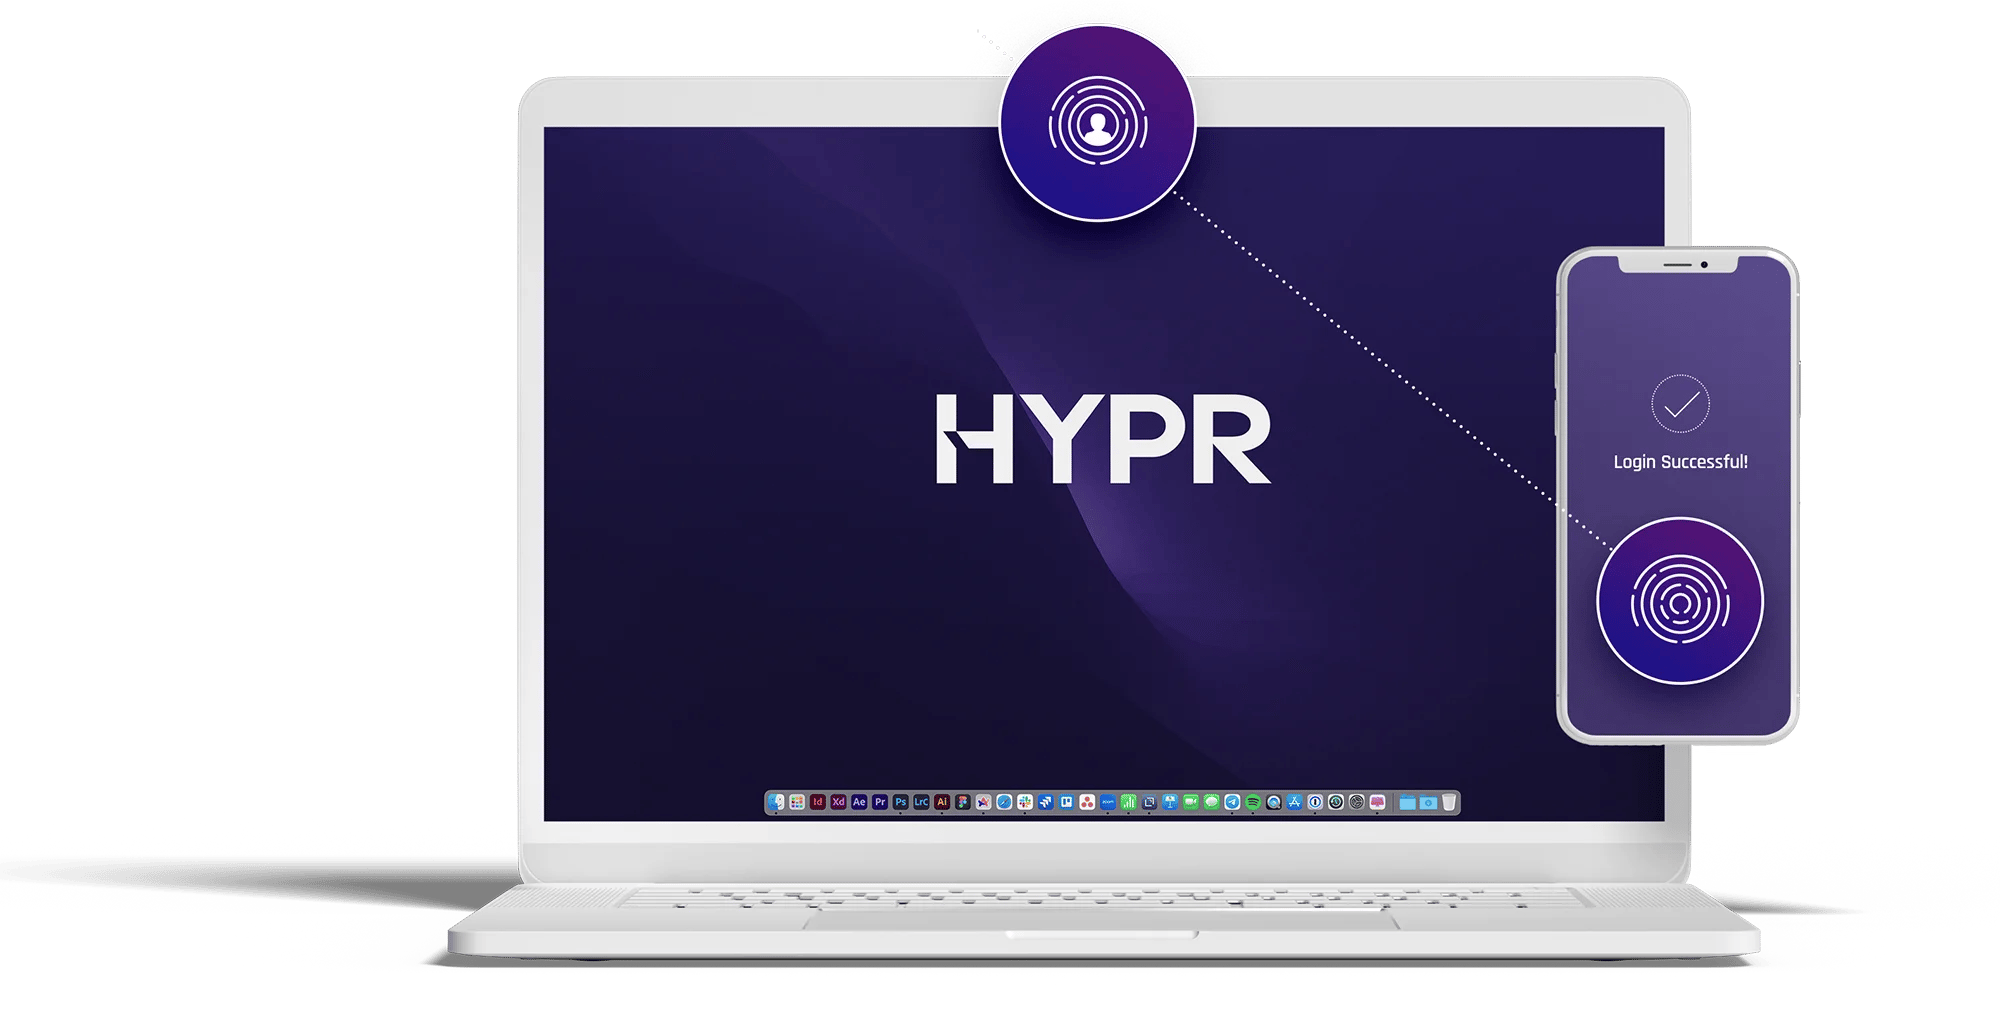 HYPR passwordless desktop mfa